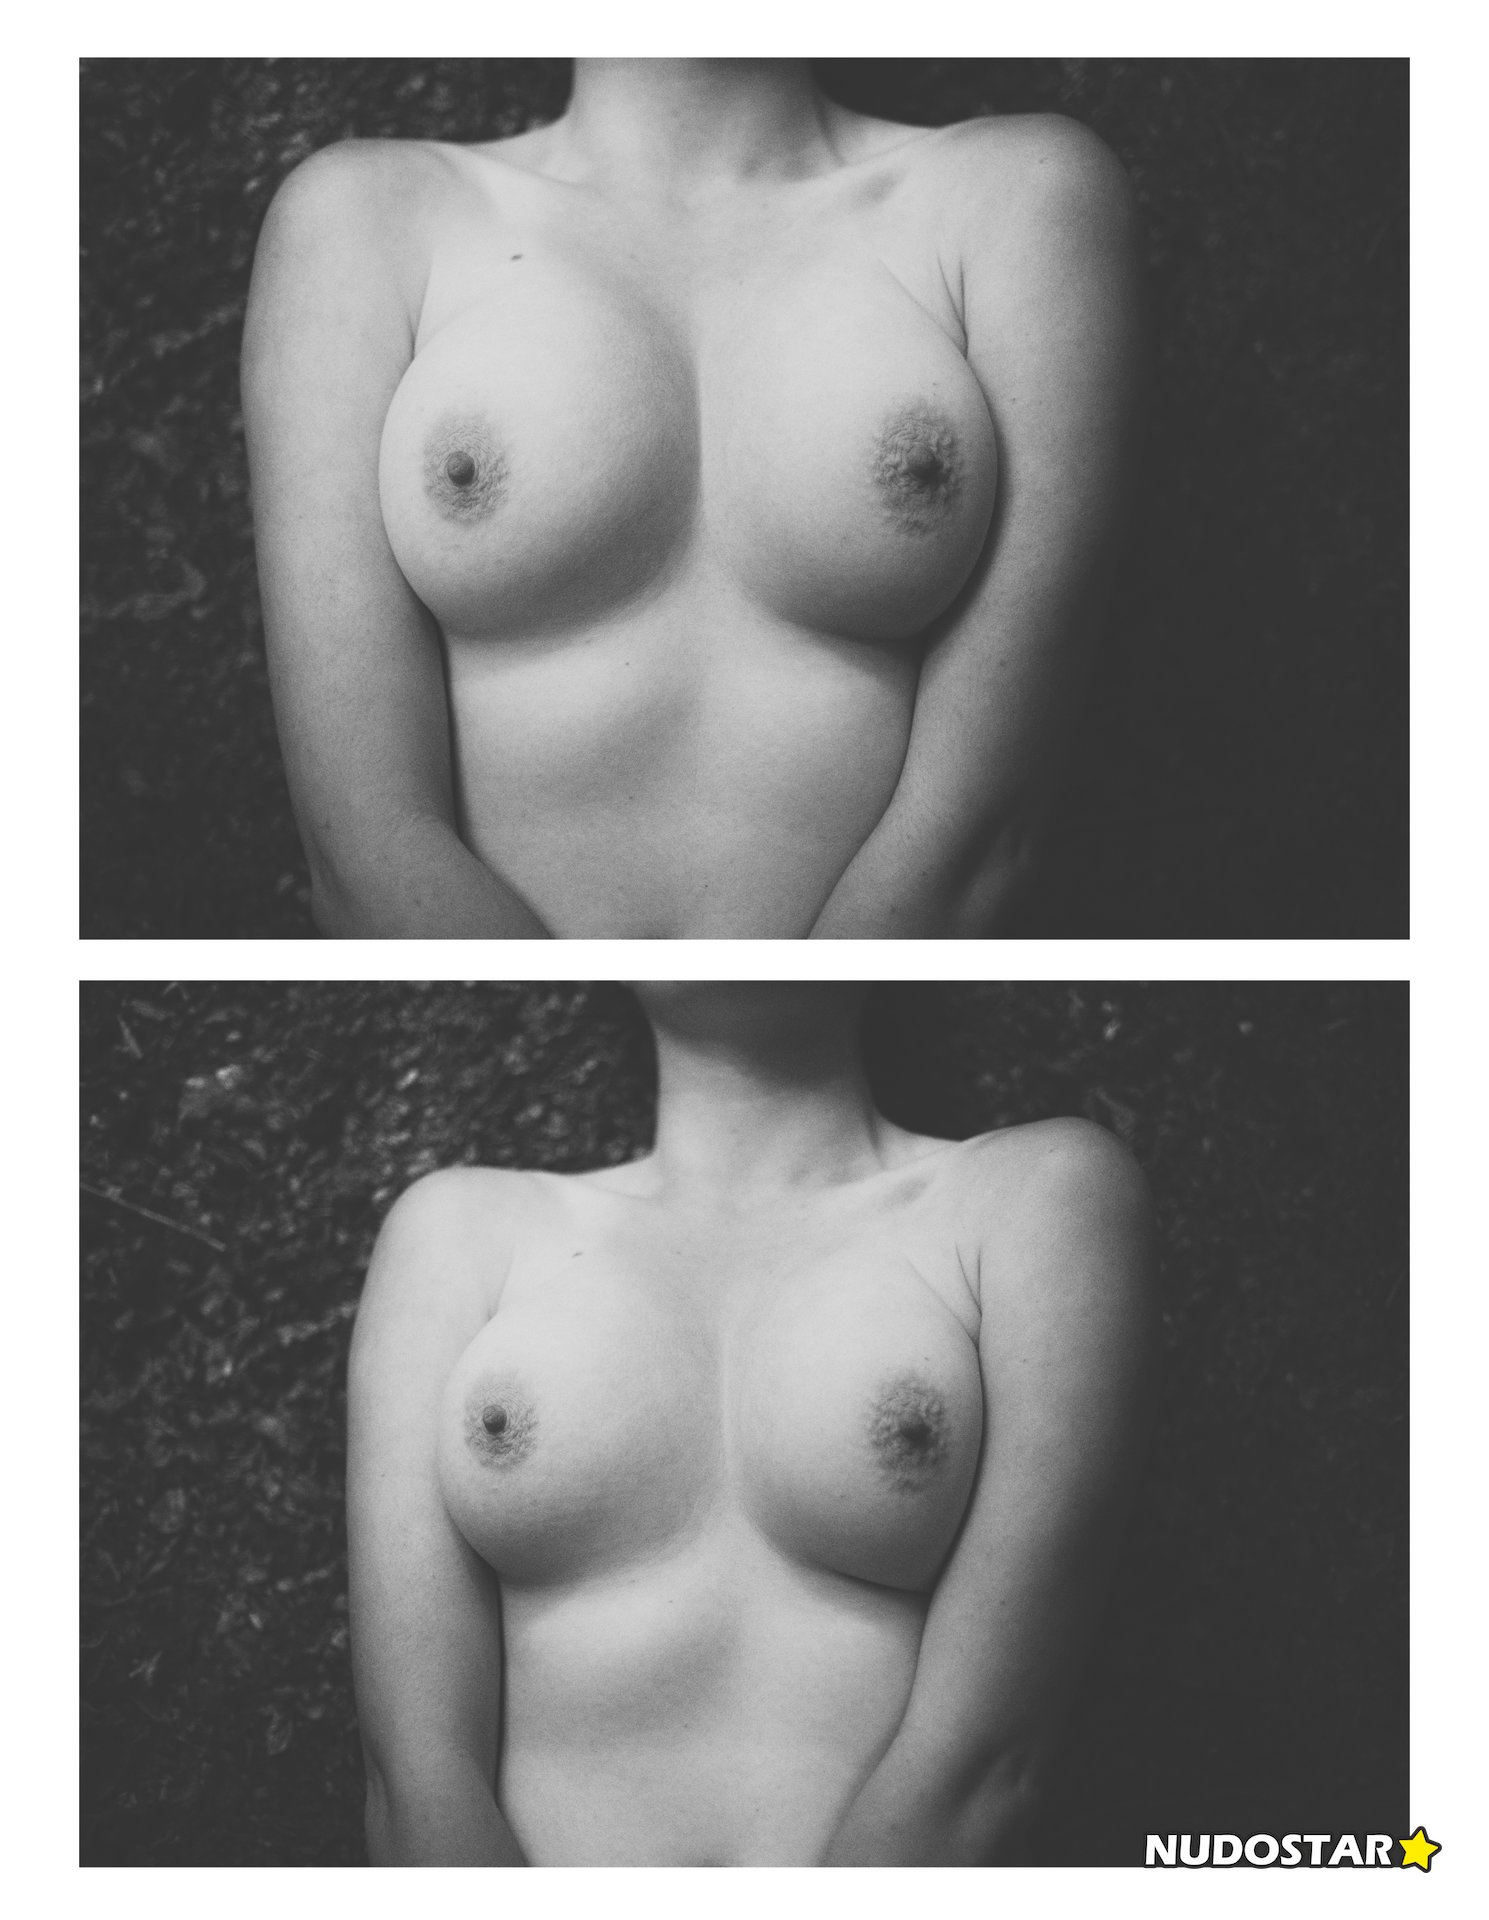 Kate Victoria – katevictoria Patreon Nude Leaks (25 Photos)